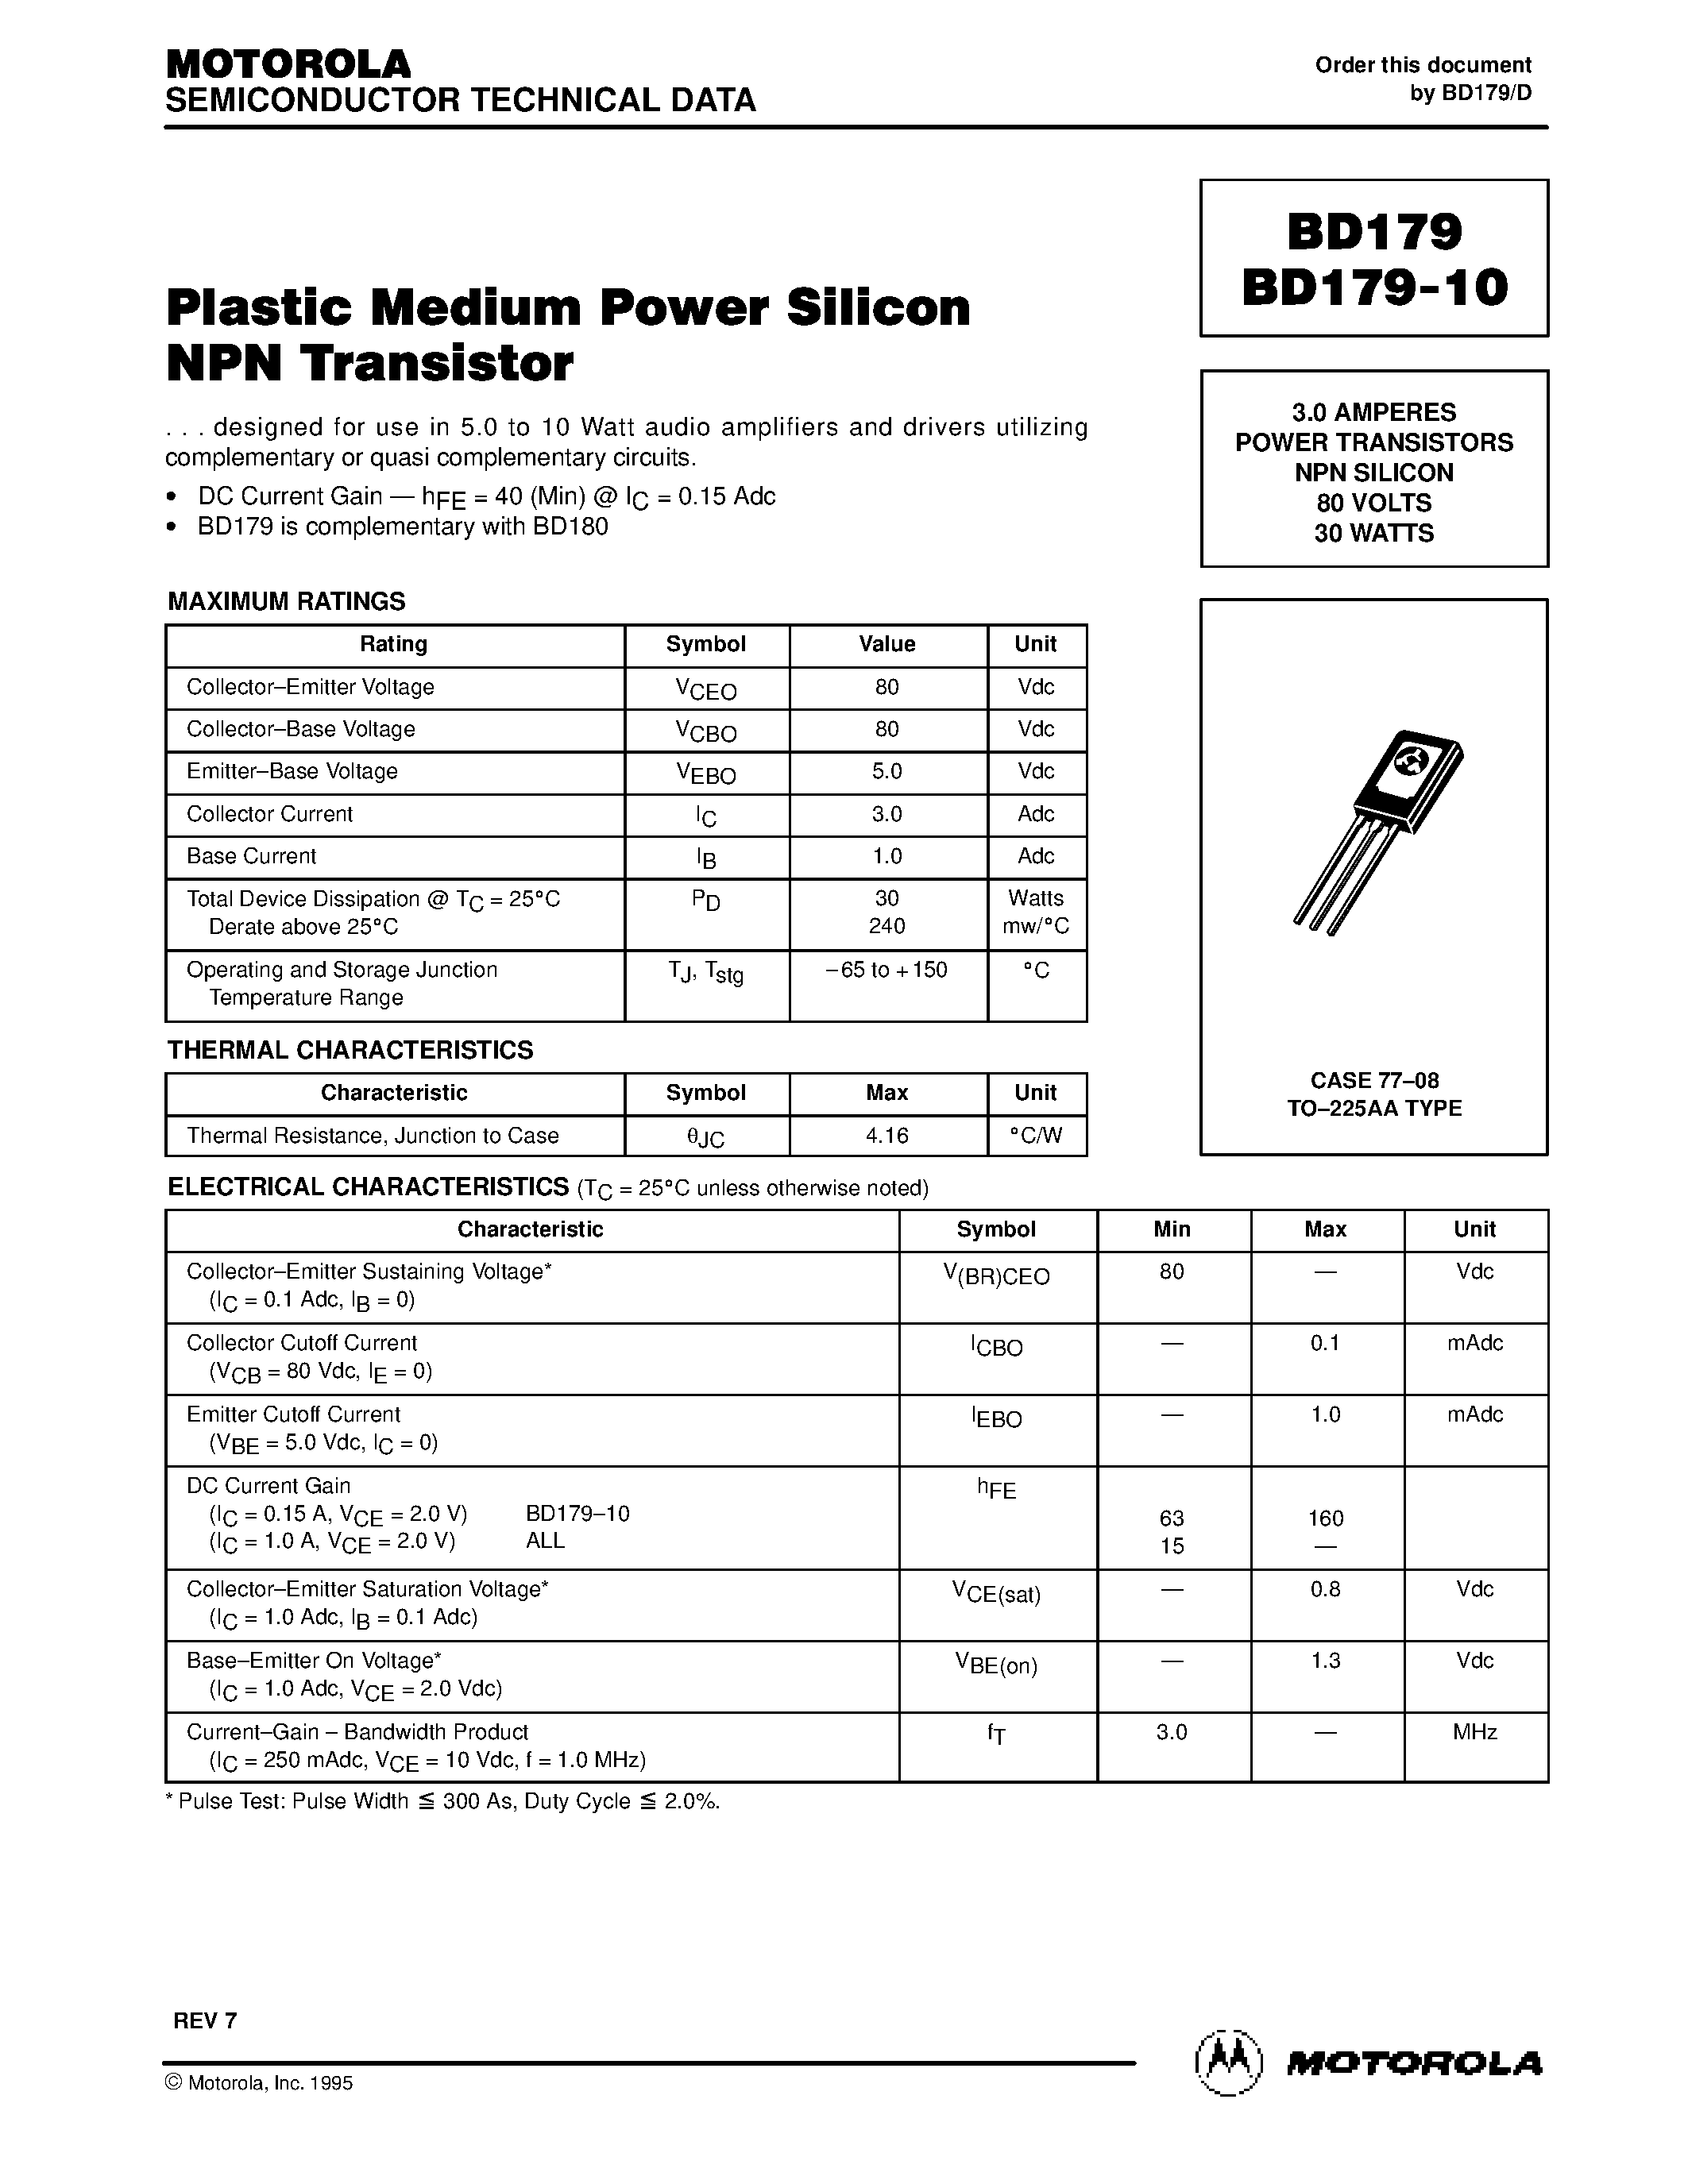 Даташит BD179 - Plastic Medium Power Silicon NPNP Transistor страница 1